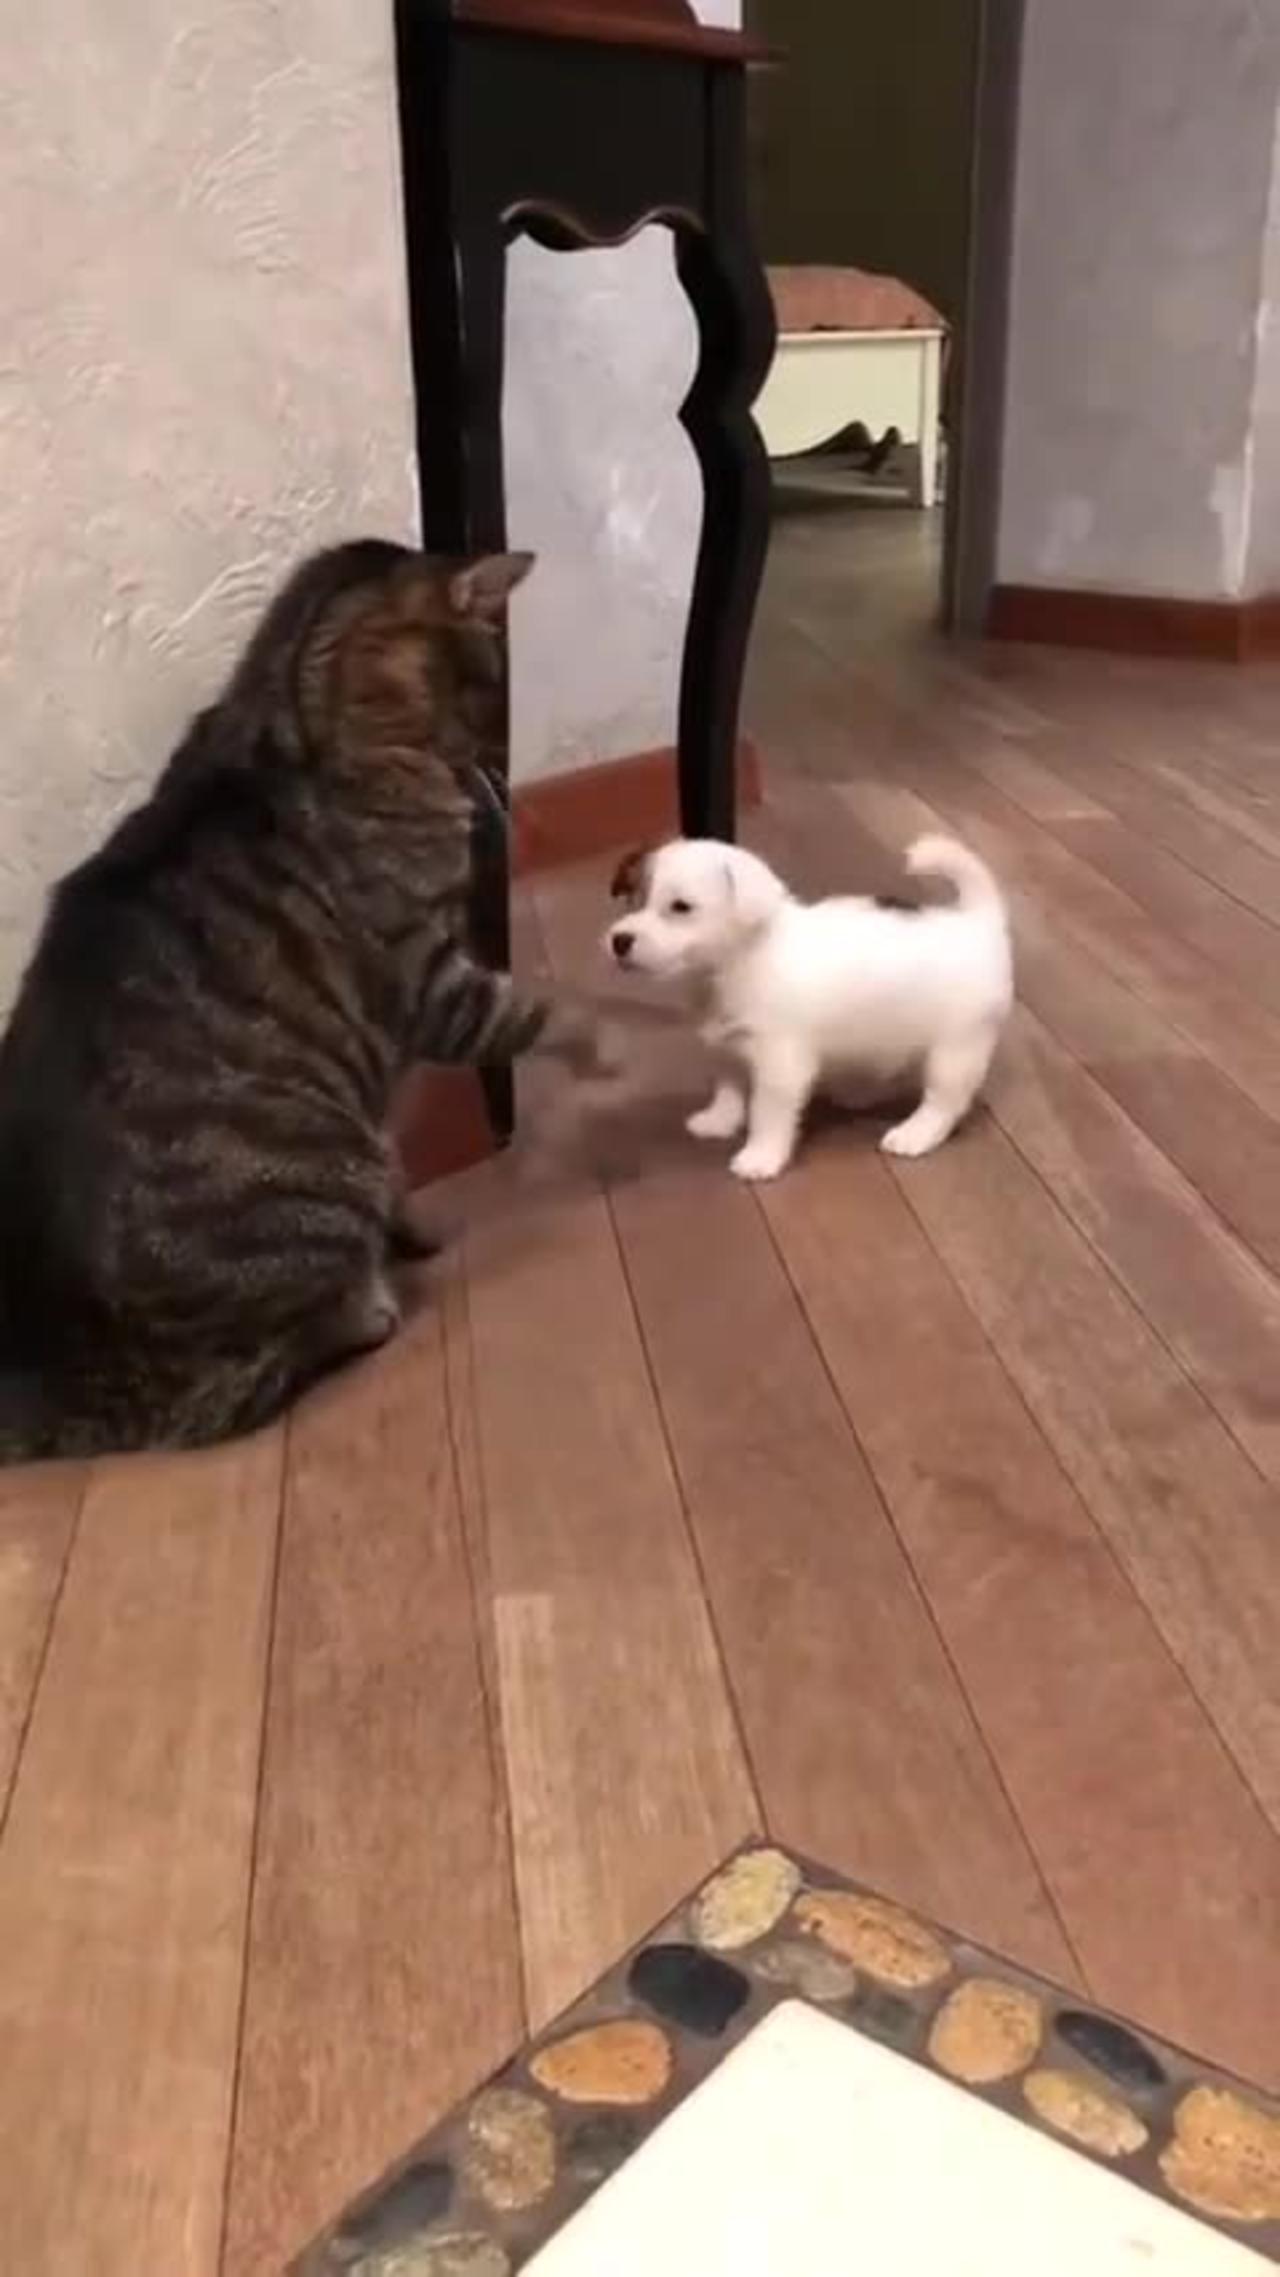 Vicious feline brutally attacks a helpless puppy